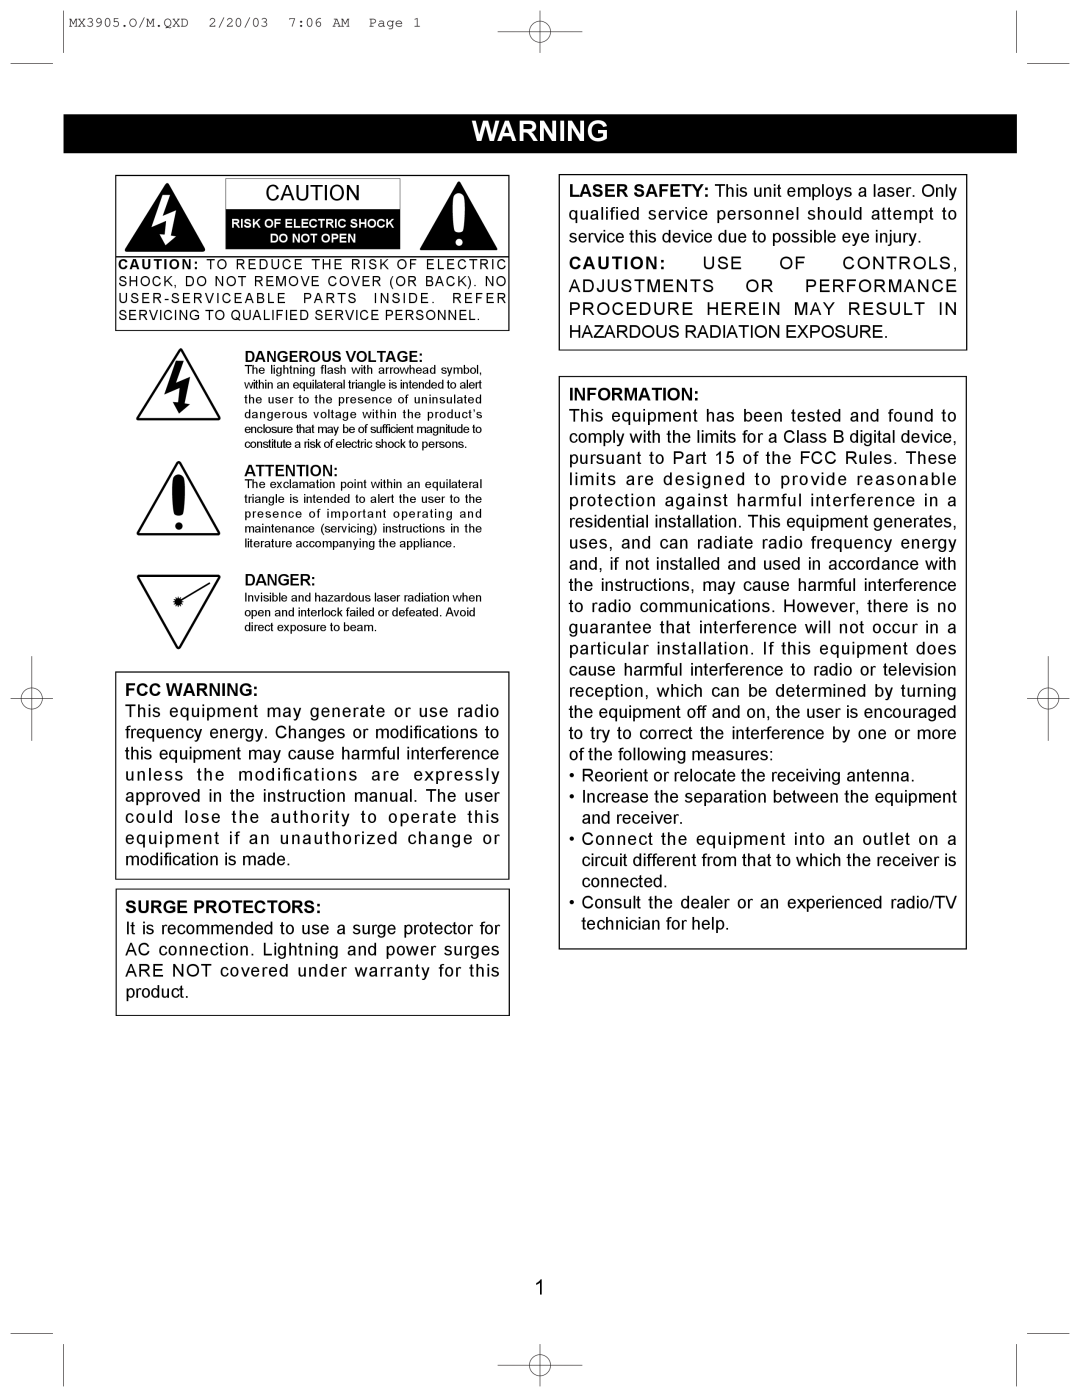 Memorex MX3905 manual Fcc Warning, Surge Protectors, Information 